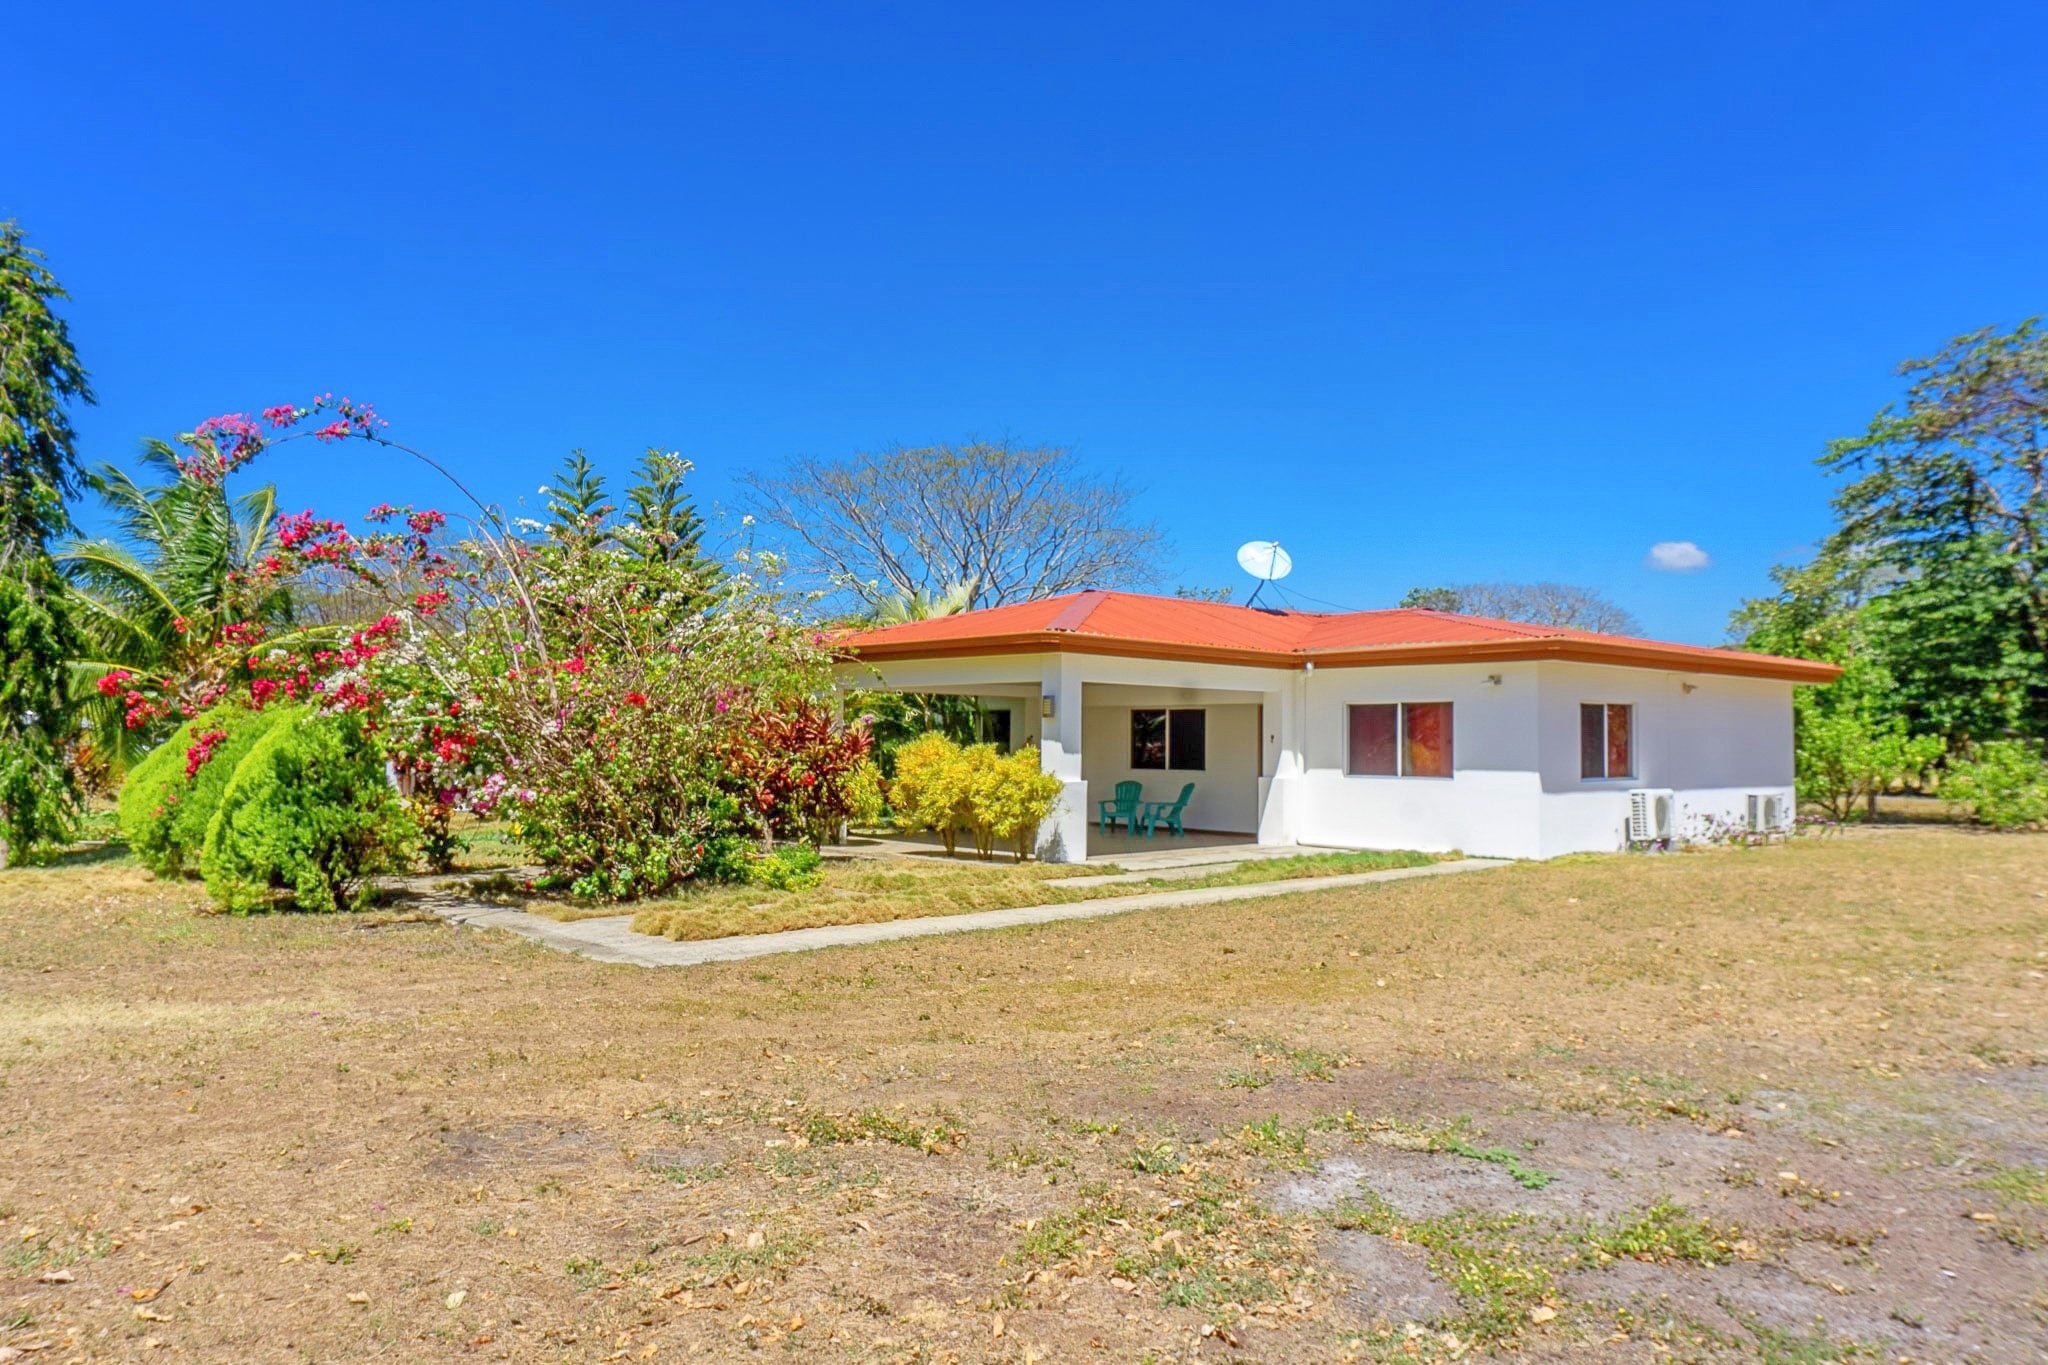 Two Homes on on Acre of Land San Juan Del Sur Nicaragua Real Estate 202215.jpg